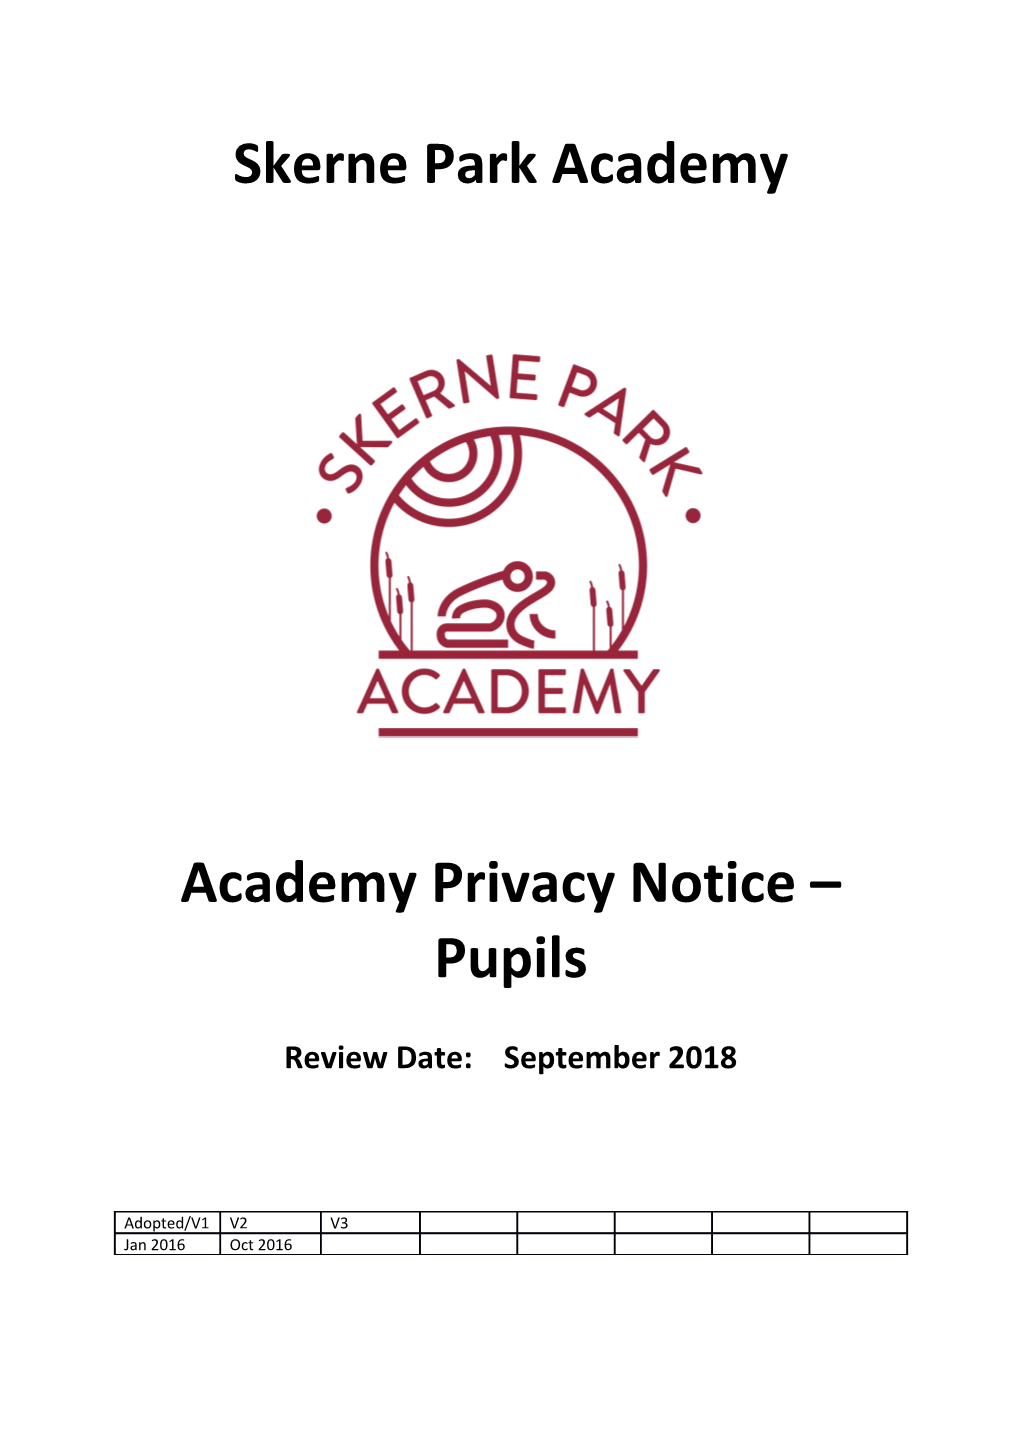 Academy Privacy Notice Pupils